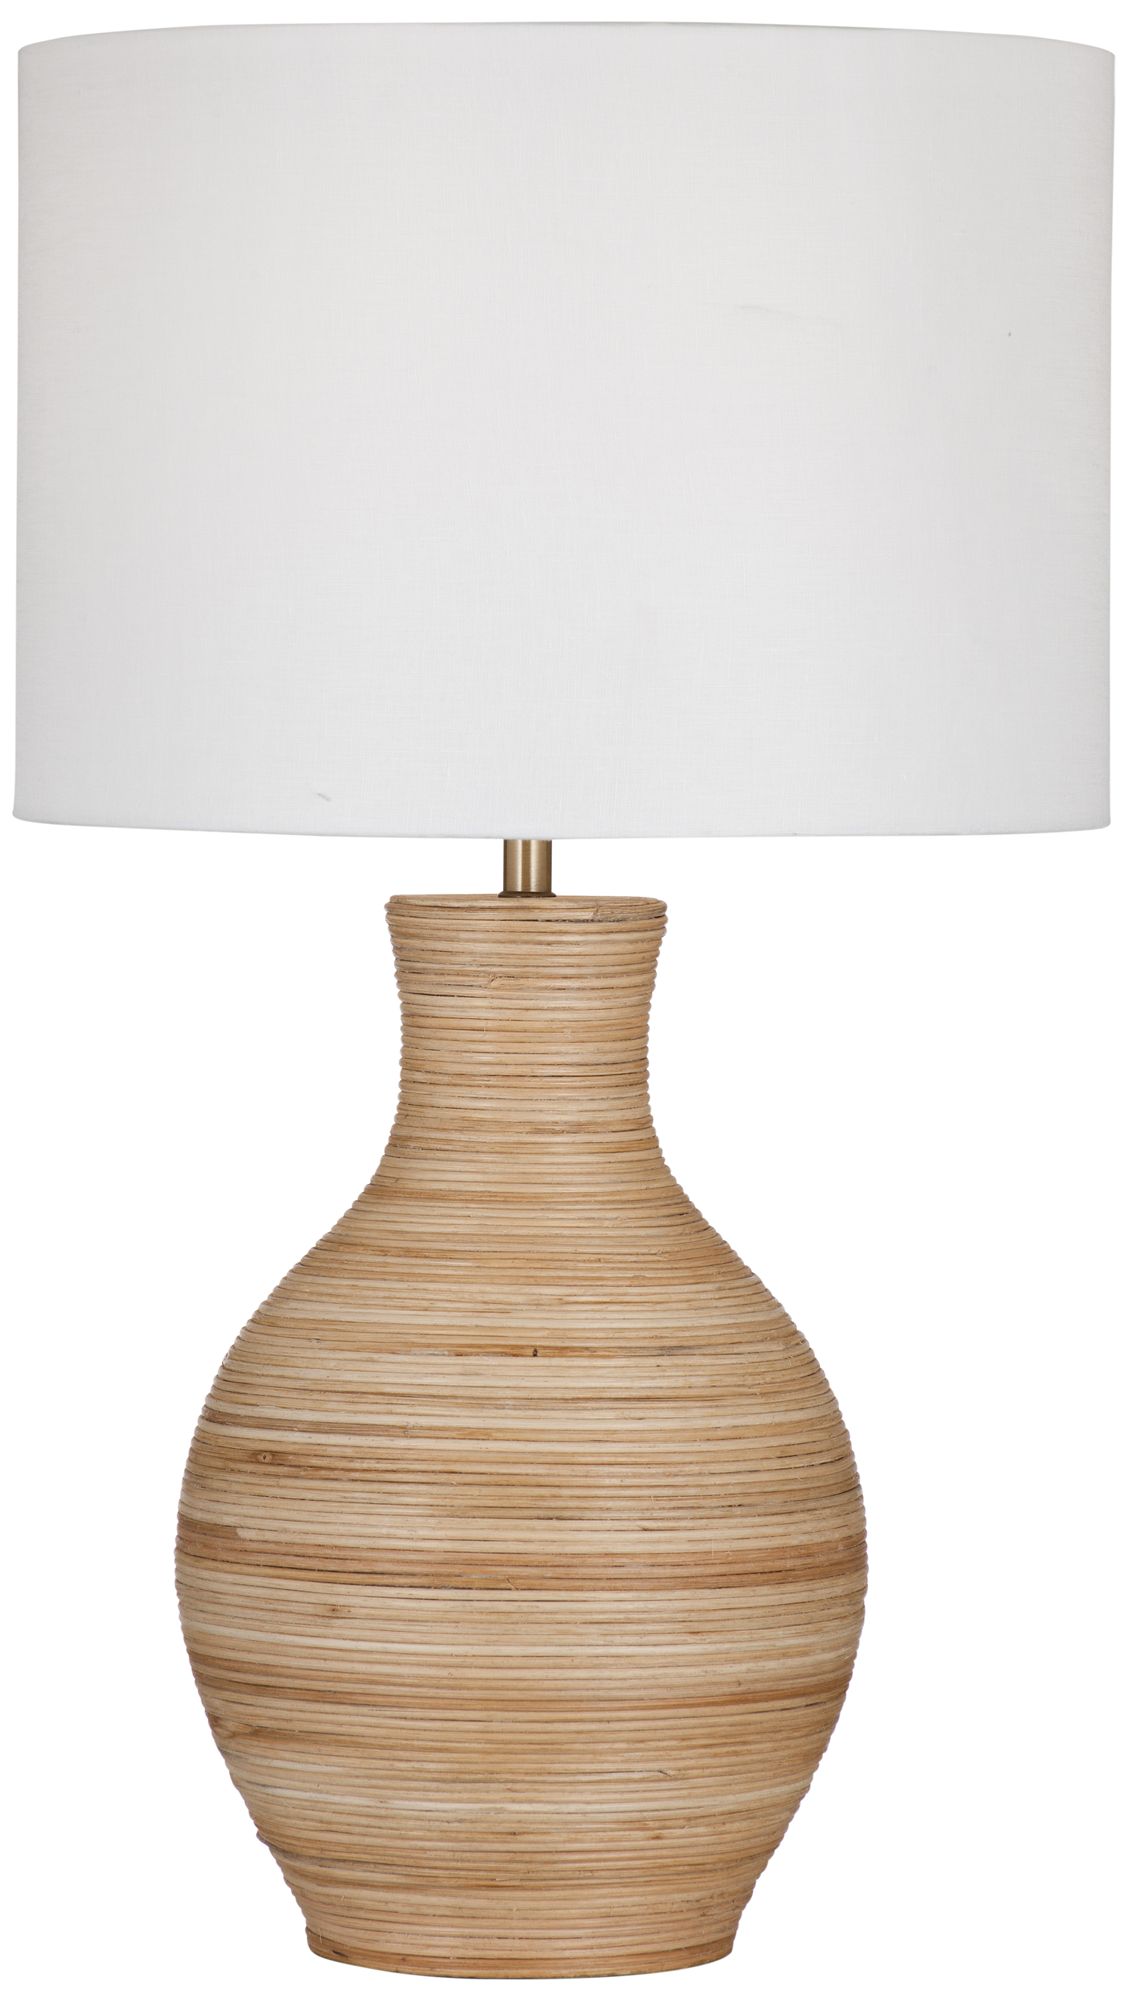 Ileene 27" Coastal Styled Natural Table Lamp